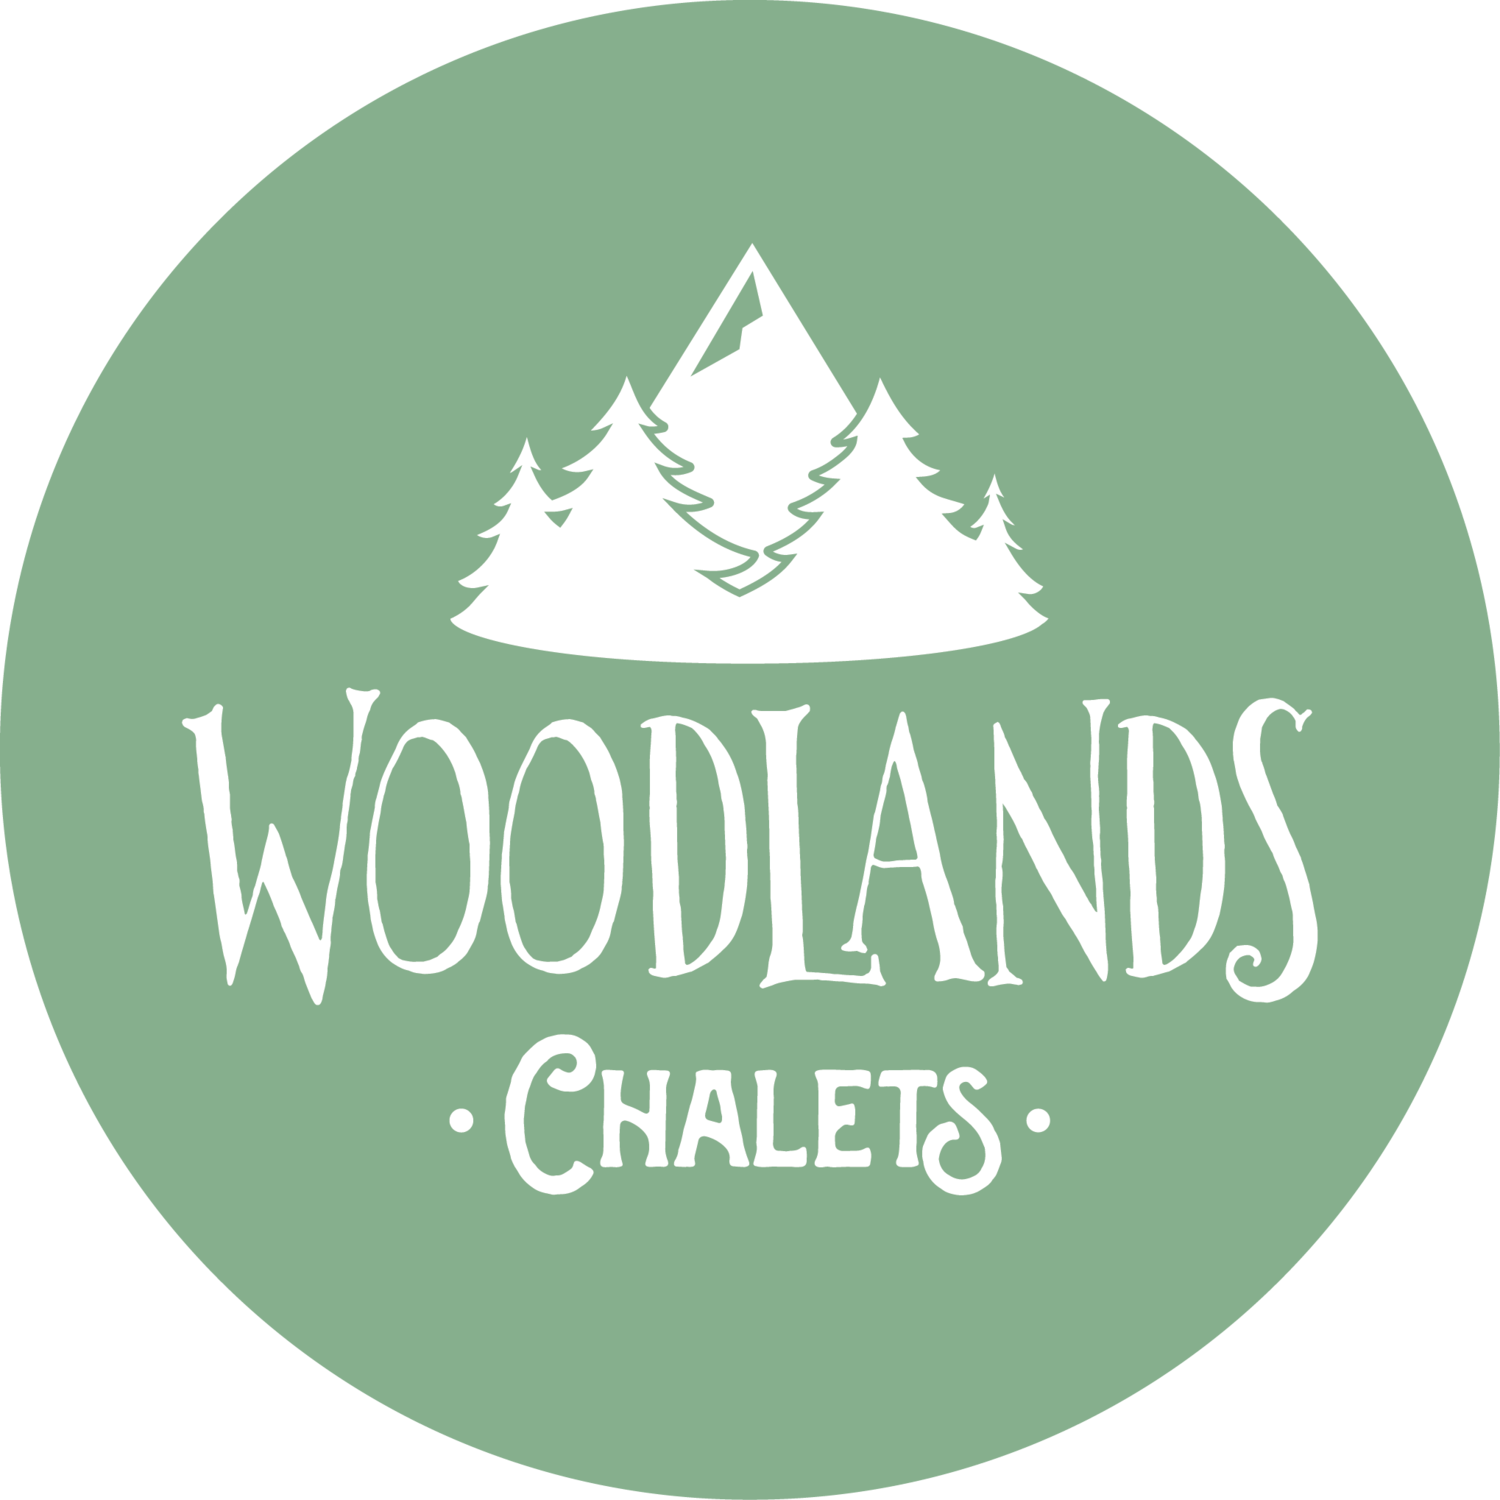 Woodlands Chalets